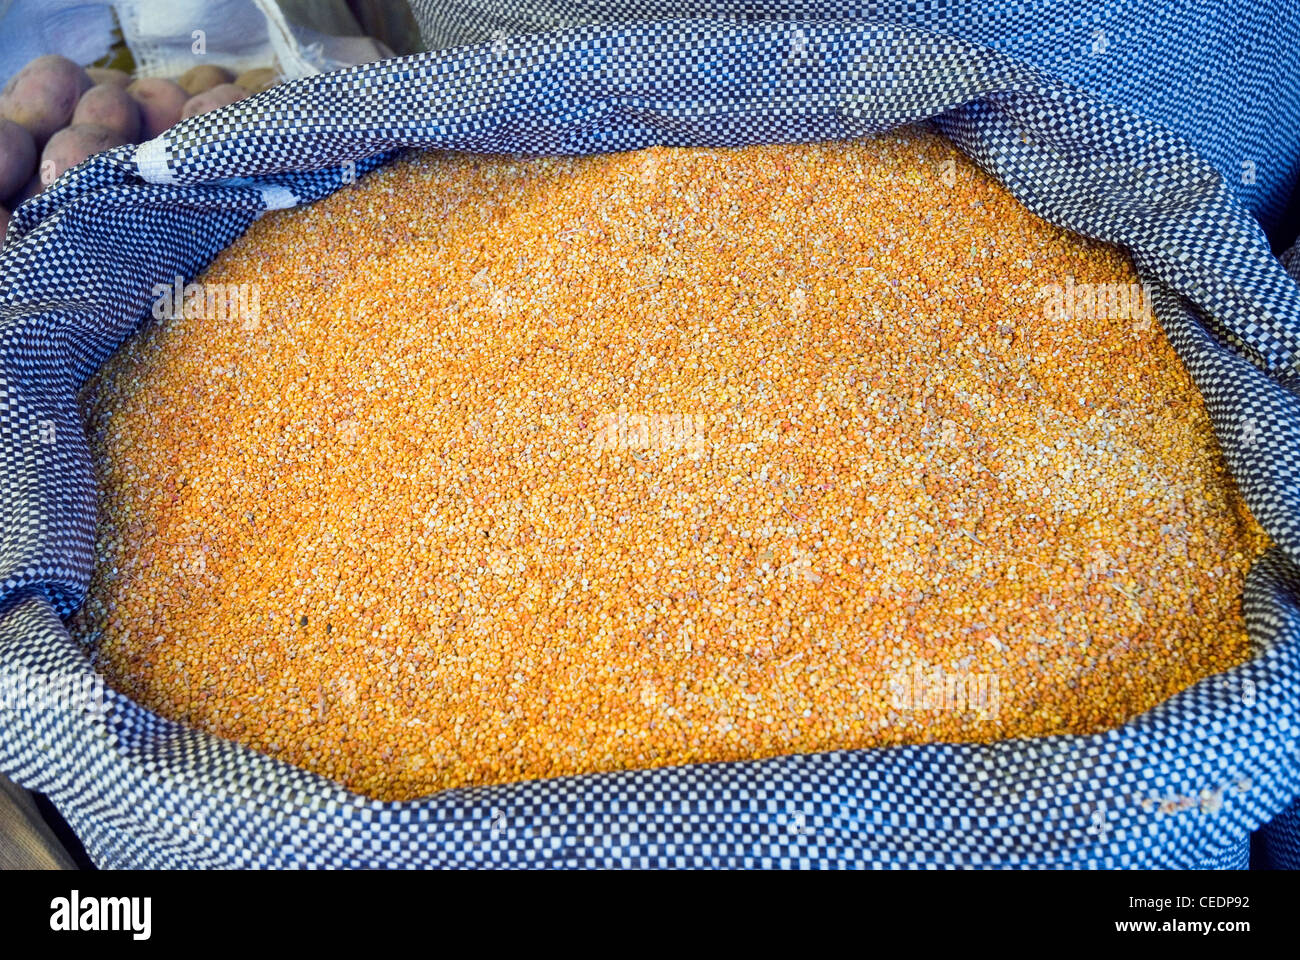 Peru, Calca, sack full of grain at market, close-up Stock Photo